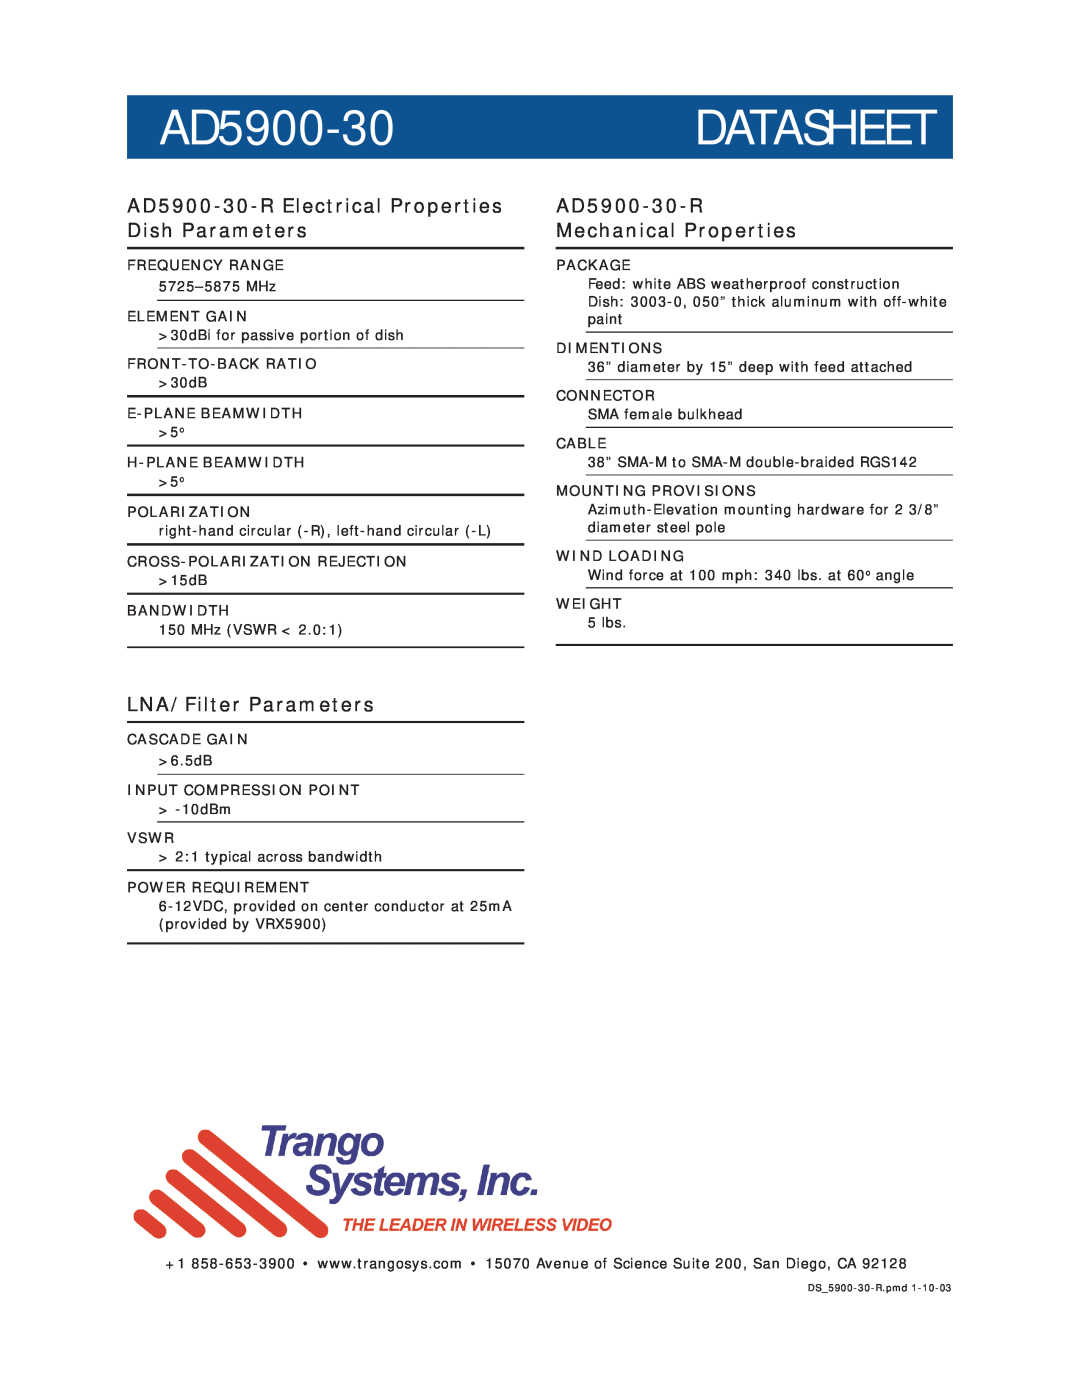 Trango Broadband manual AD5900-30DATASHEET, AD5900-30-R Electrical Properties Dish Parameters, LNA/Filter Parameters 